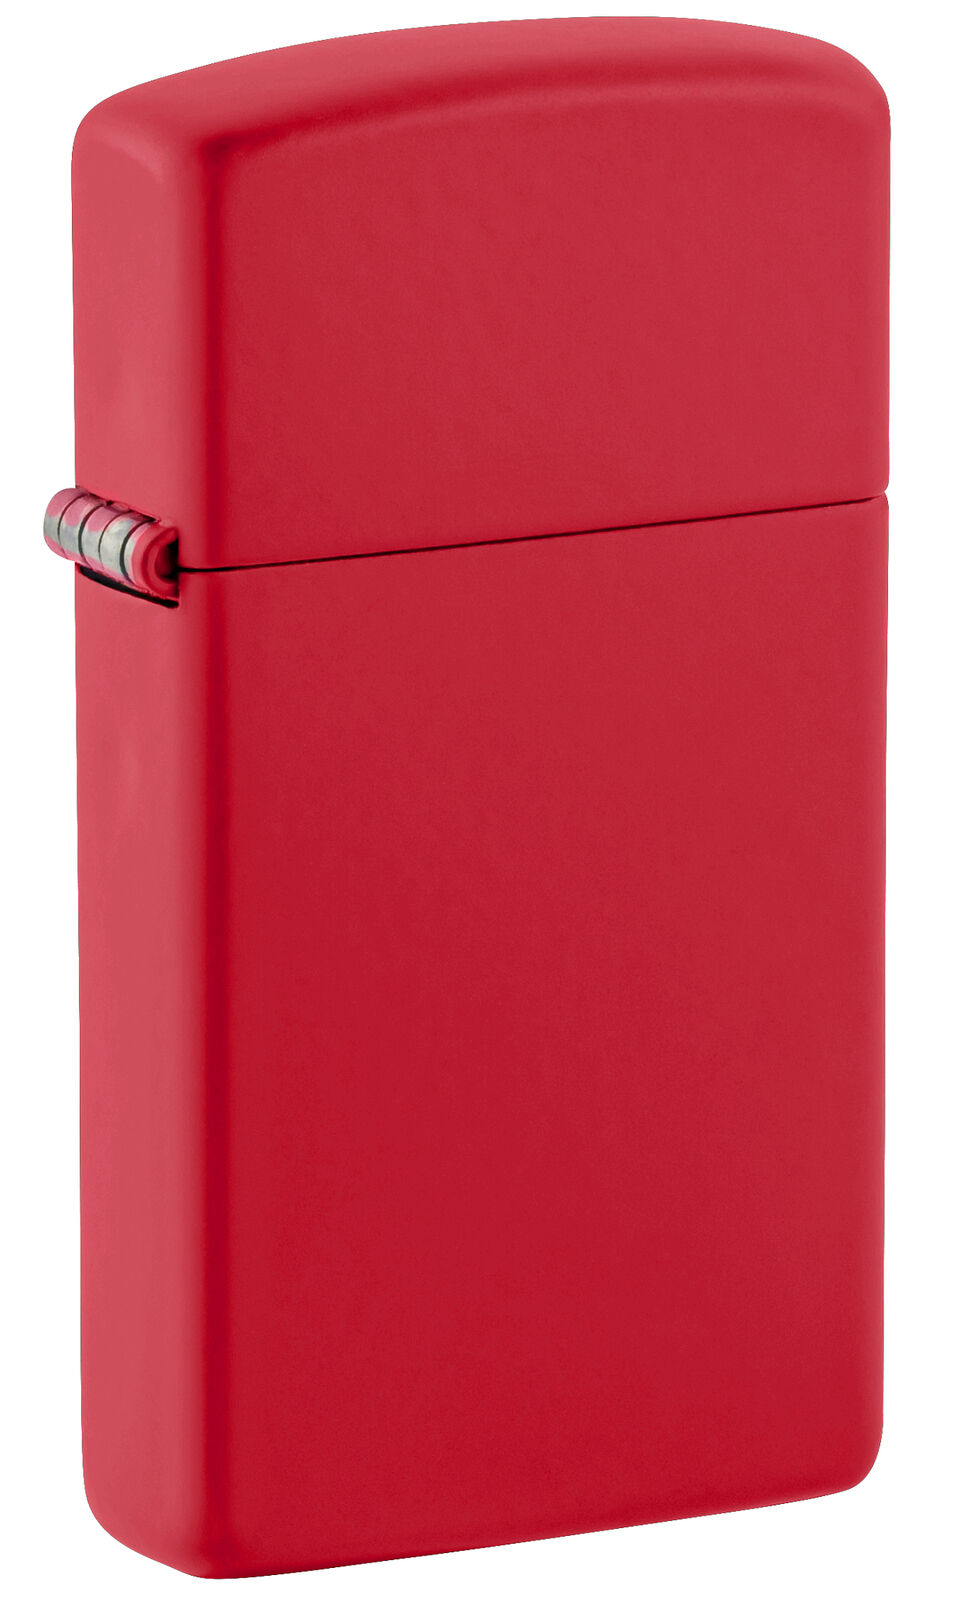 Zippo Slim Red Matte Windproof Lighter, 1633